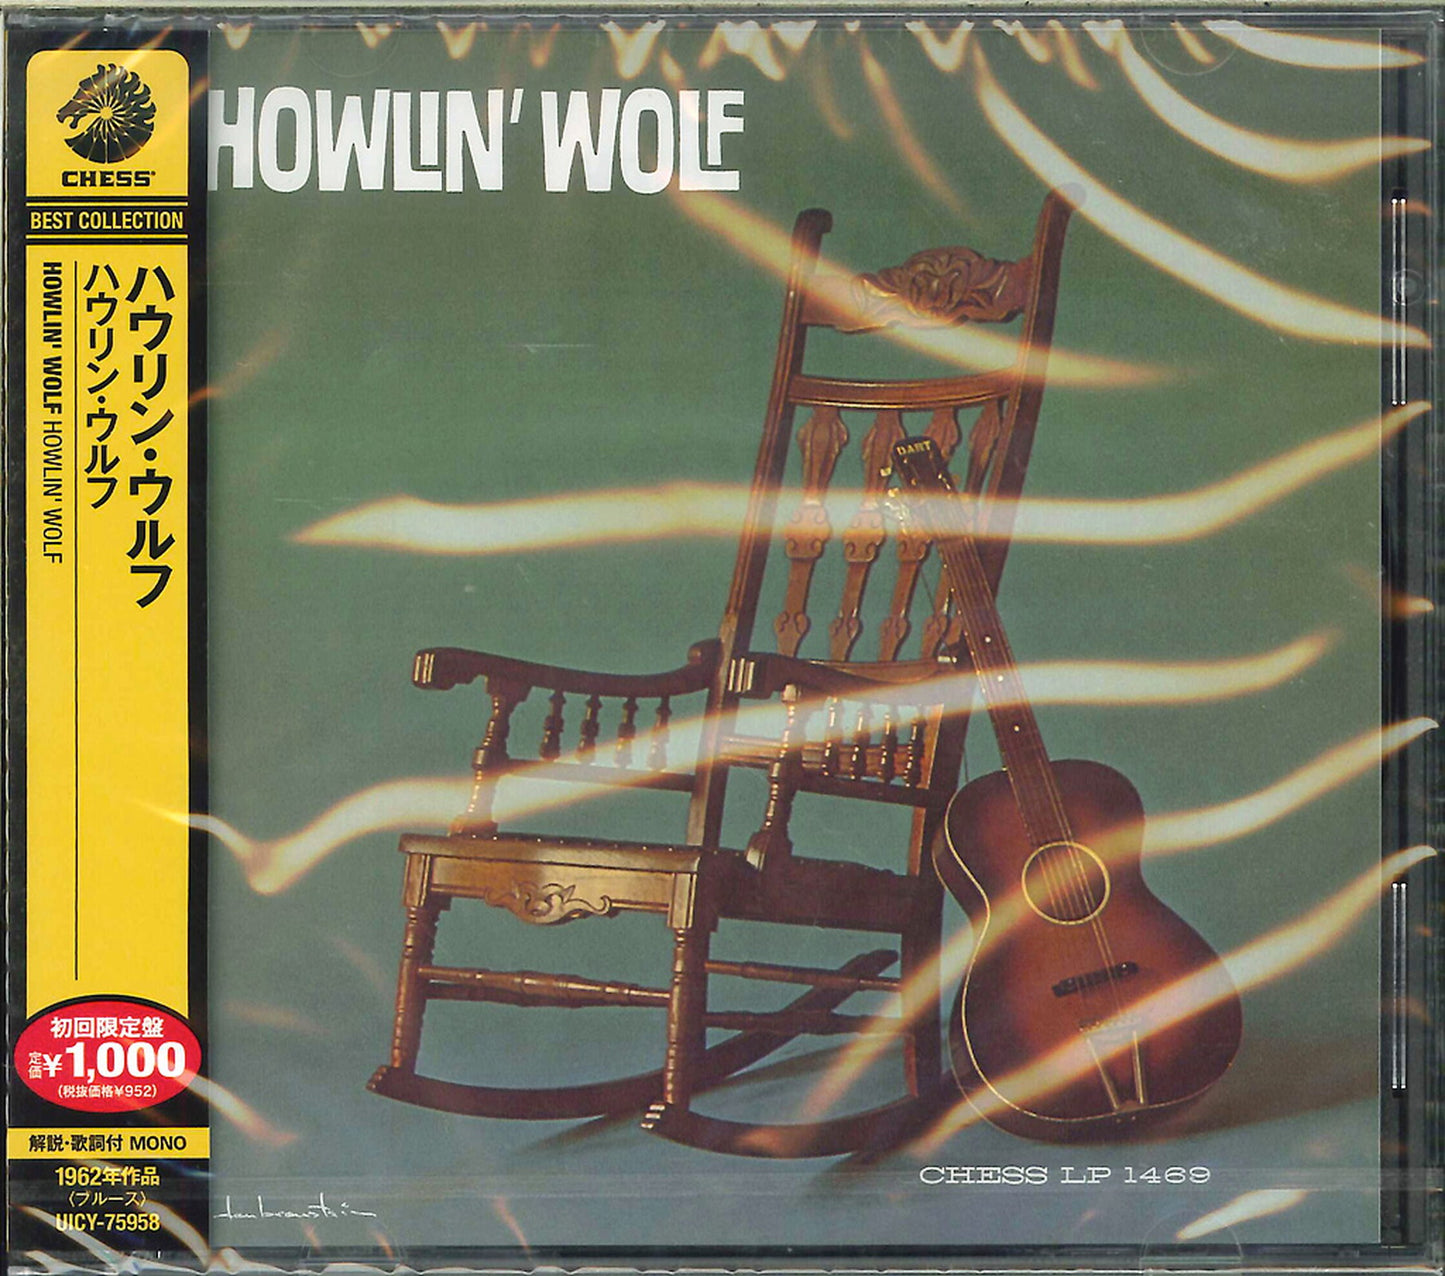 Howlin' Wolf - Howlin' Wolf (Aka Rockin' Chair Album) - Japan  CD Limited Edition